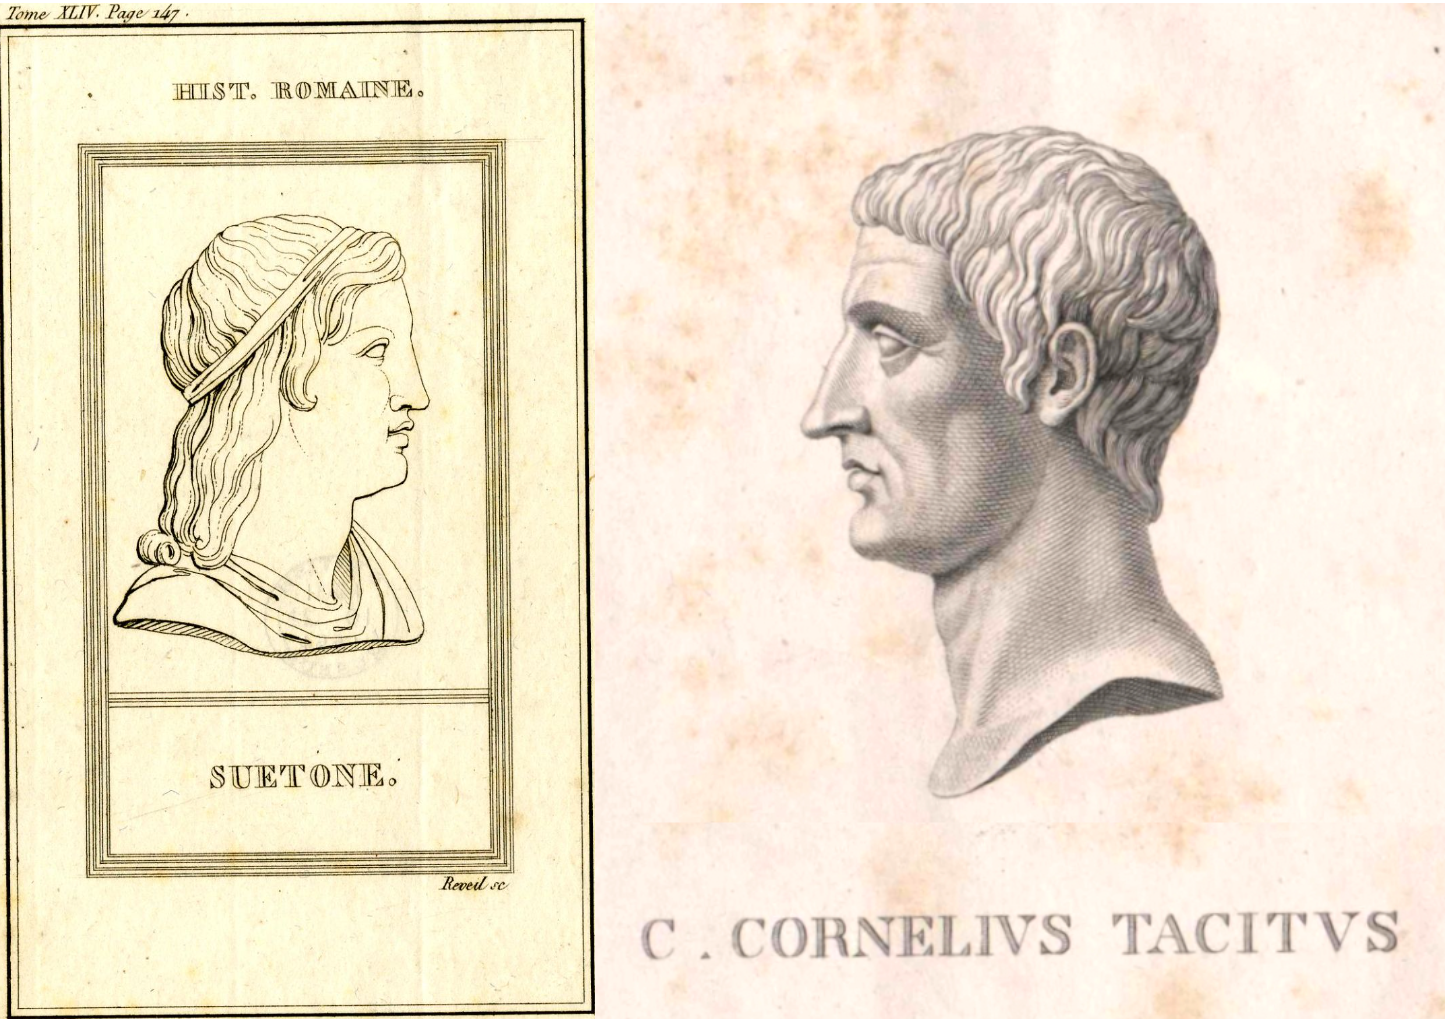 Portrait of Suetonius, print, Achille Reveil, c. 1815-1851. British Museum number 1901,1022.1554 (left). Portrait of Tacitus, print, Unknown, c. 18th century. The Austrian National Library (right). 